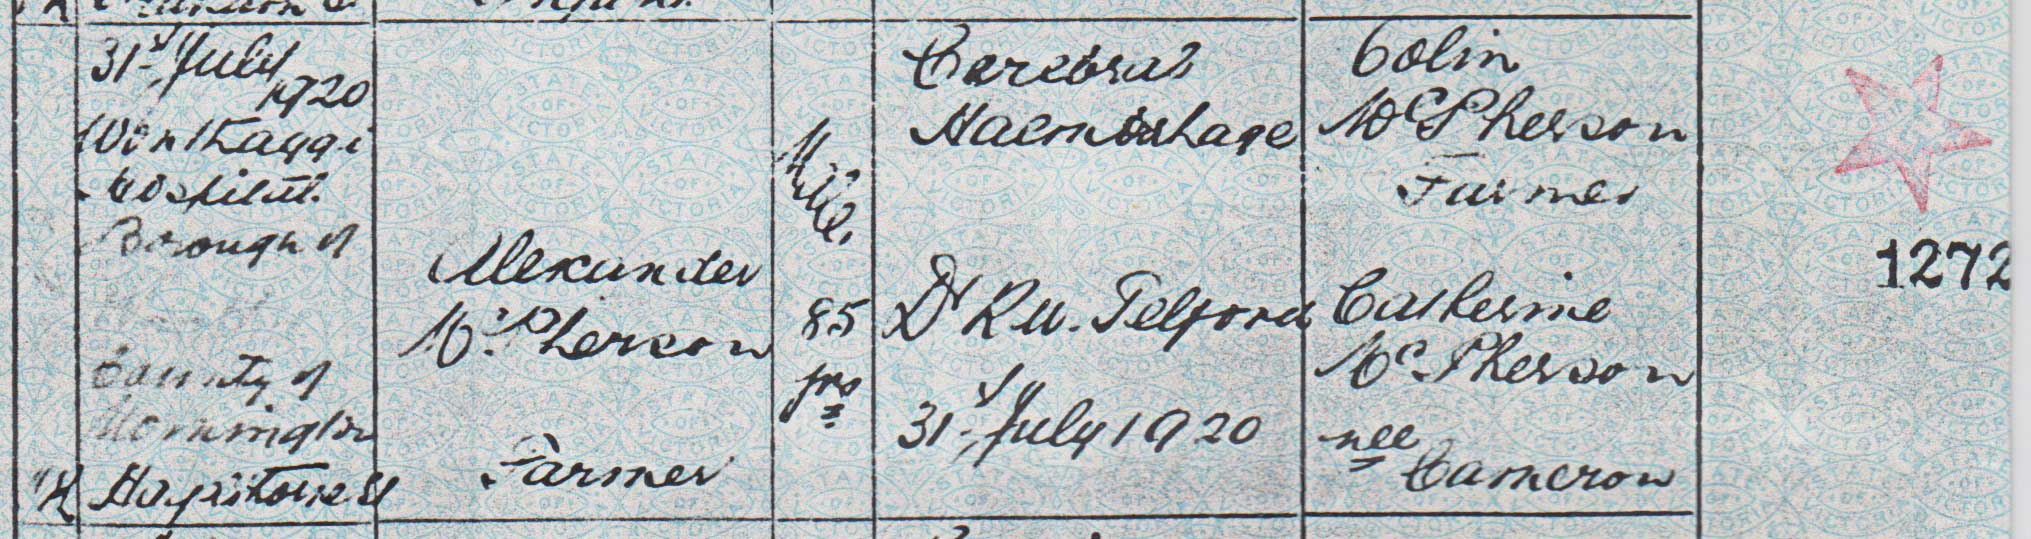 Alexander McPherson death certificate part 1